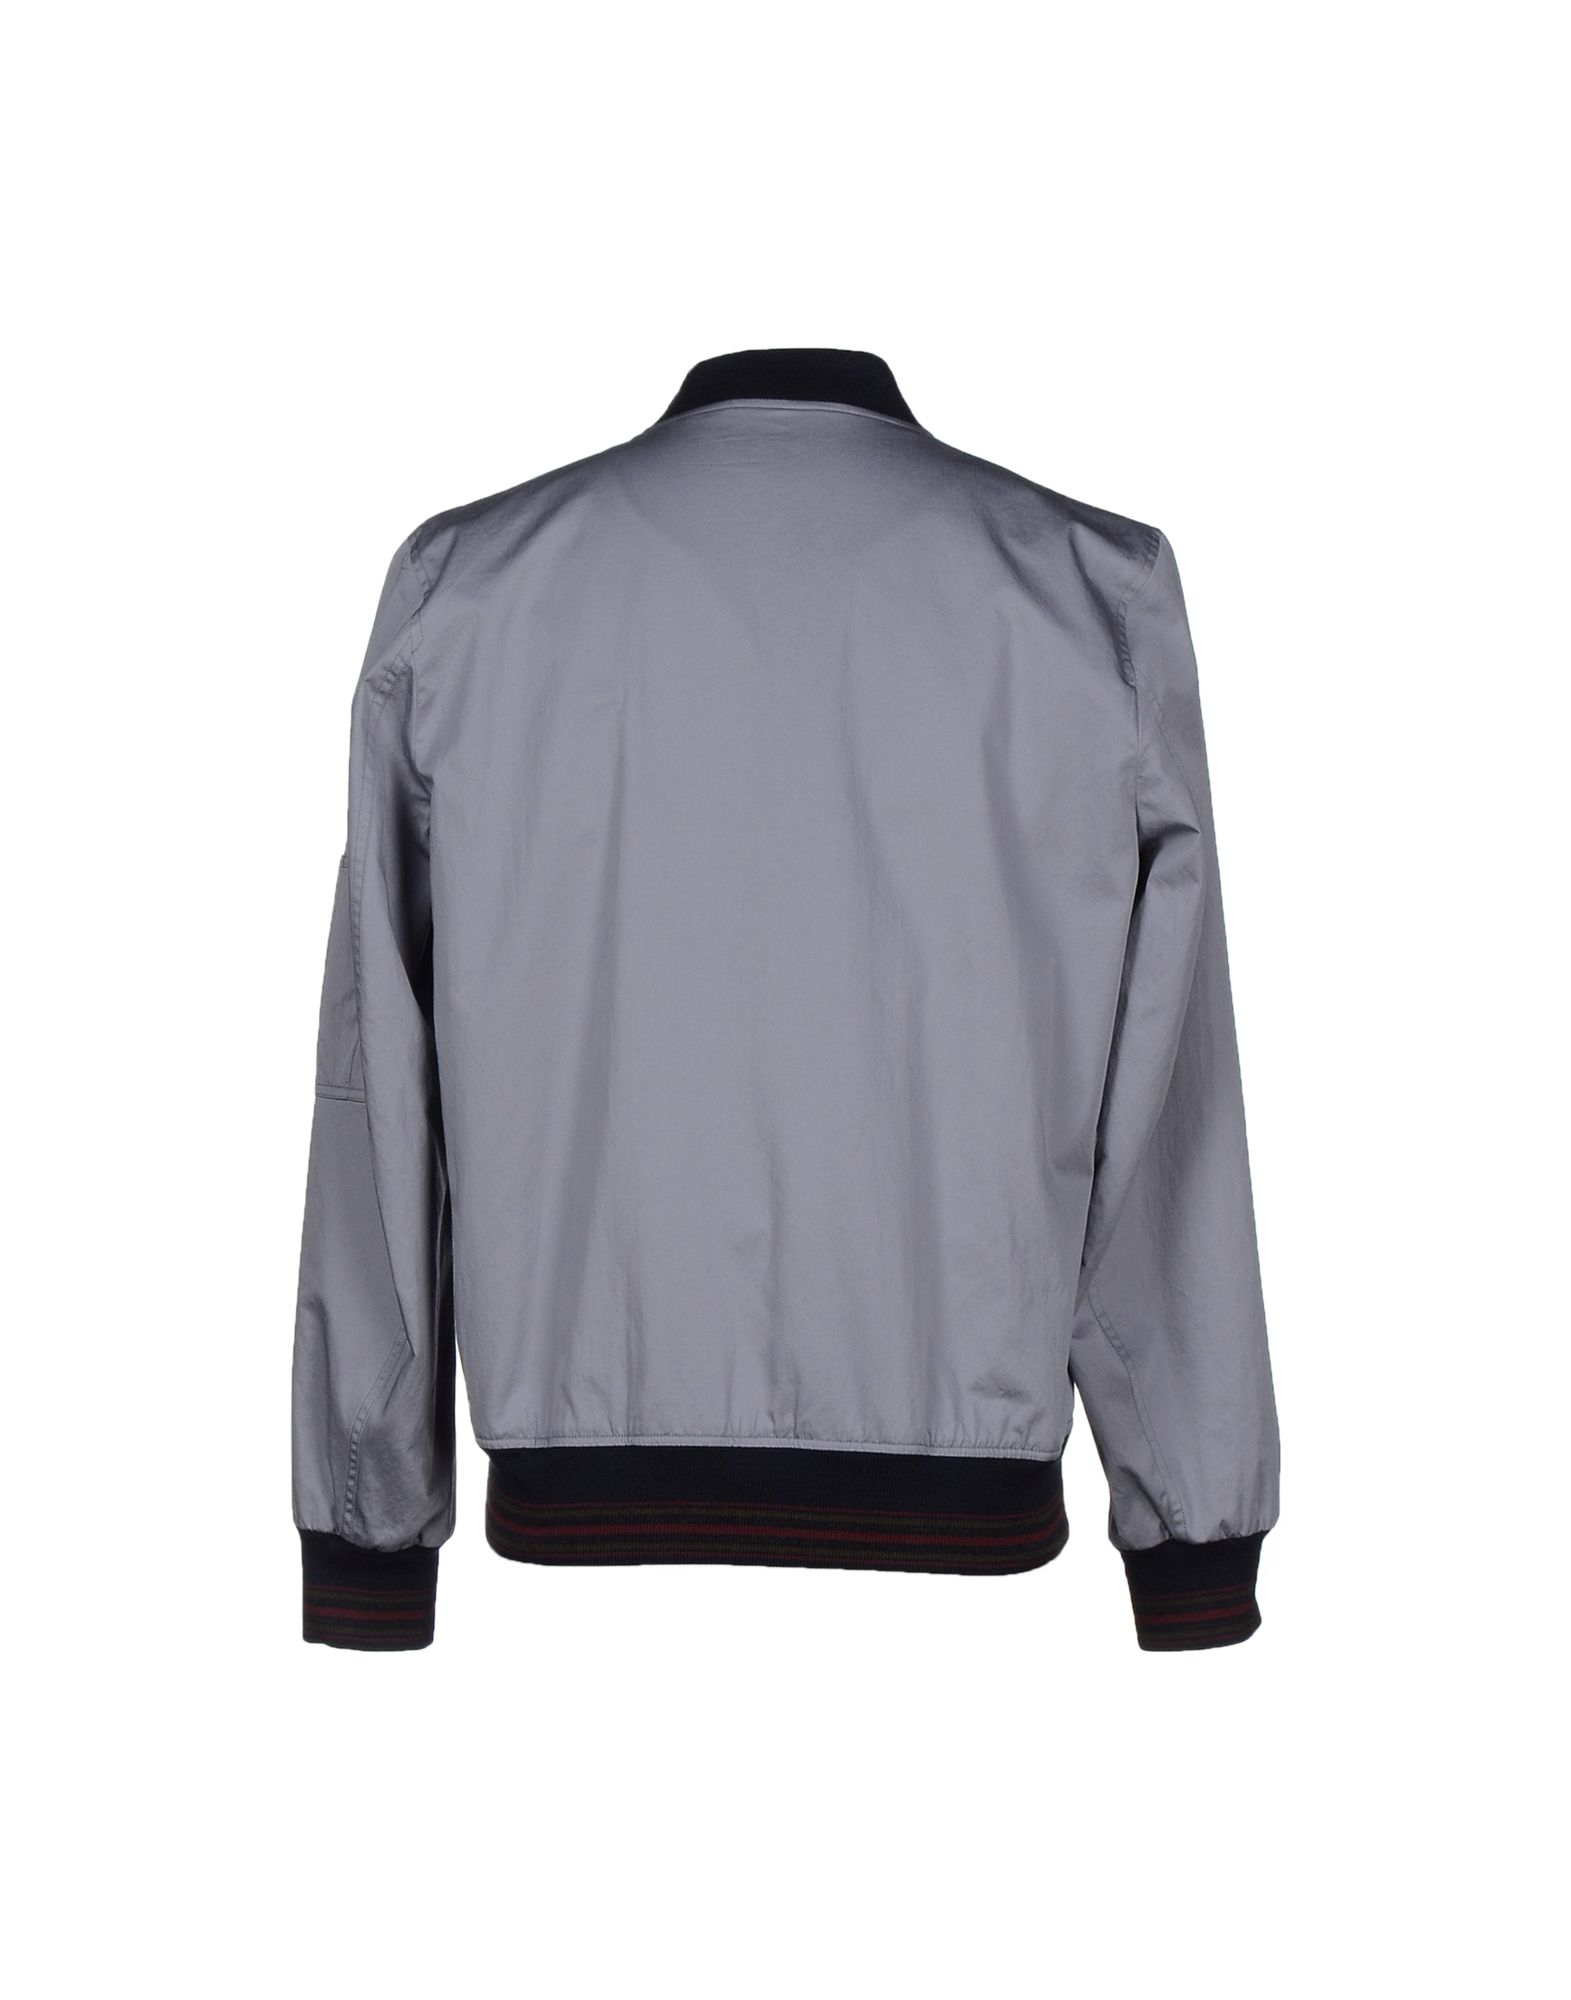 Paul smith Jacket in Gray for Men (Grey) | Lyst